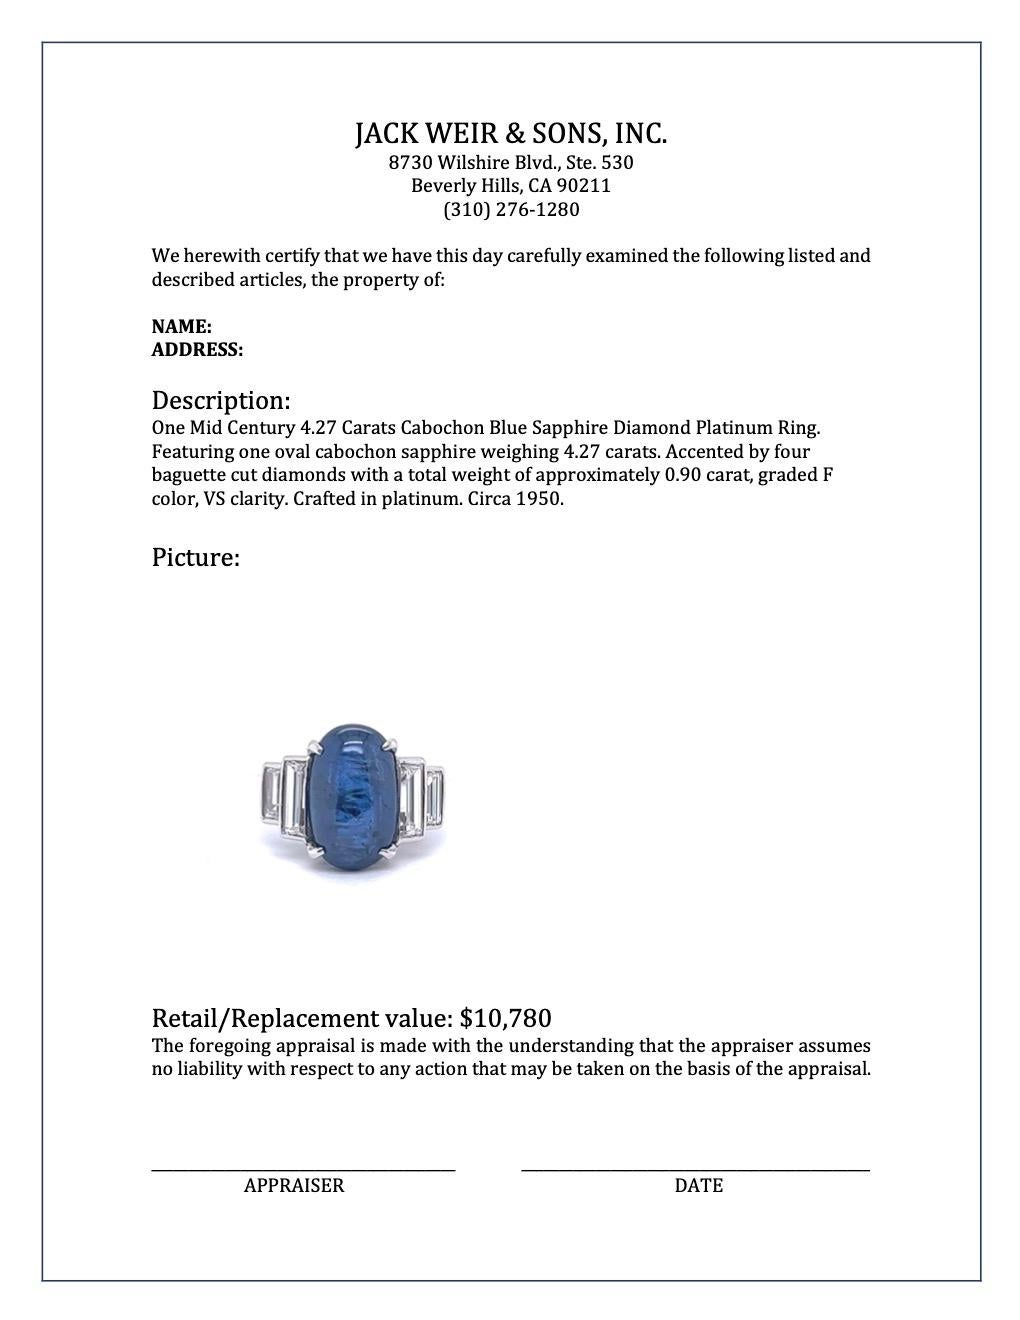 Mid Century 4.27 Carats Cabochon Blue Sapphire Diamond Platinum Ring 4